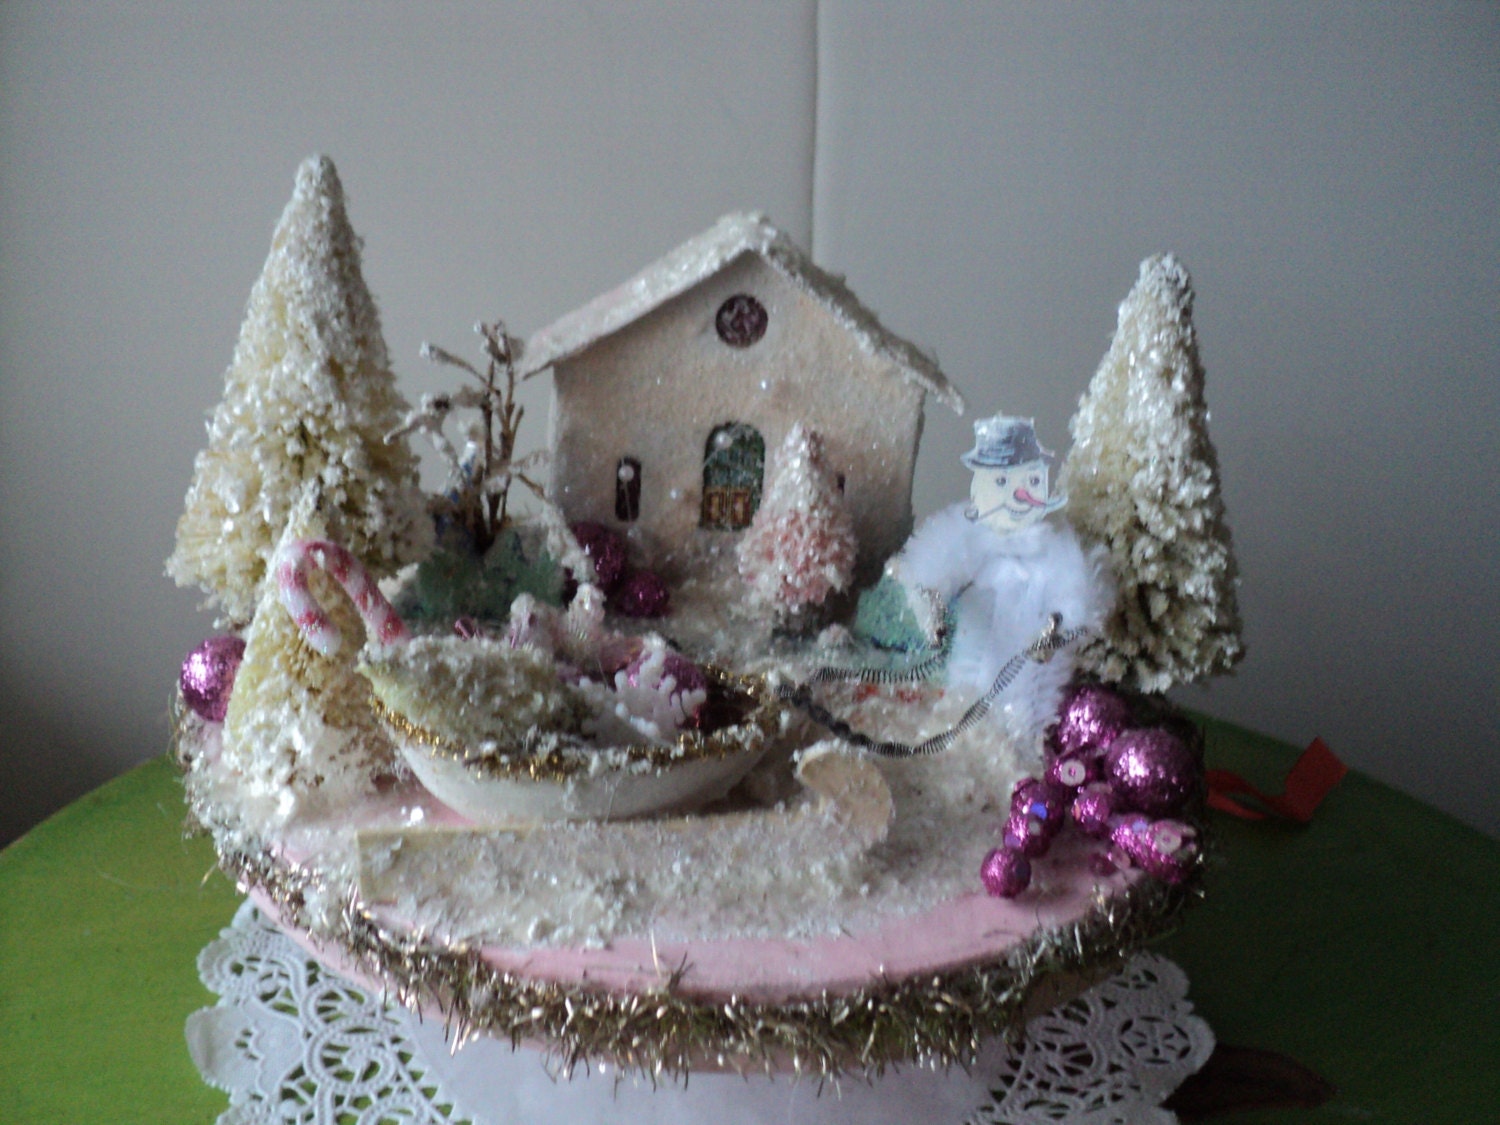 Snowy Christmas house with snowman